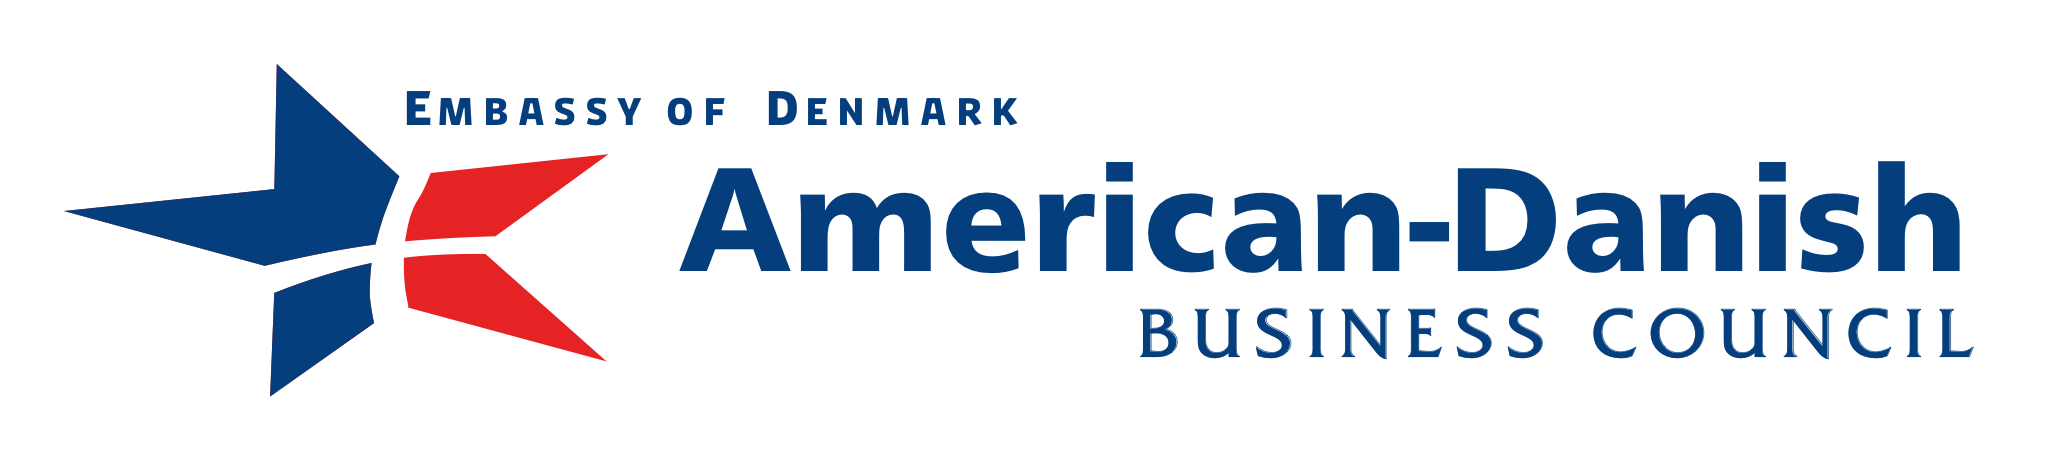 American-Danish Business Council logo